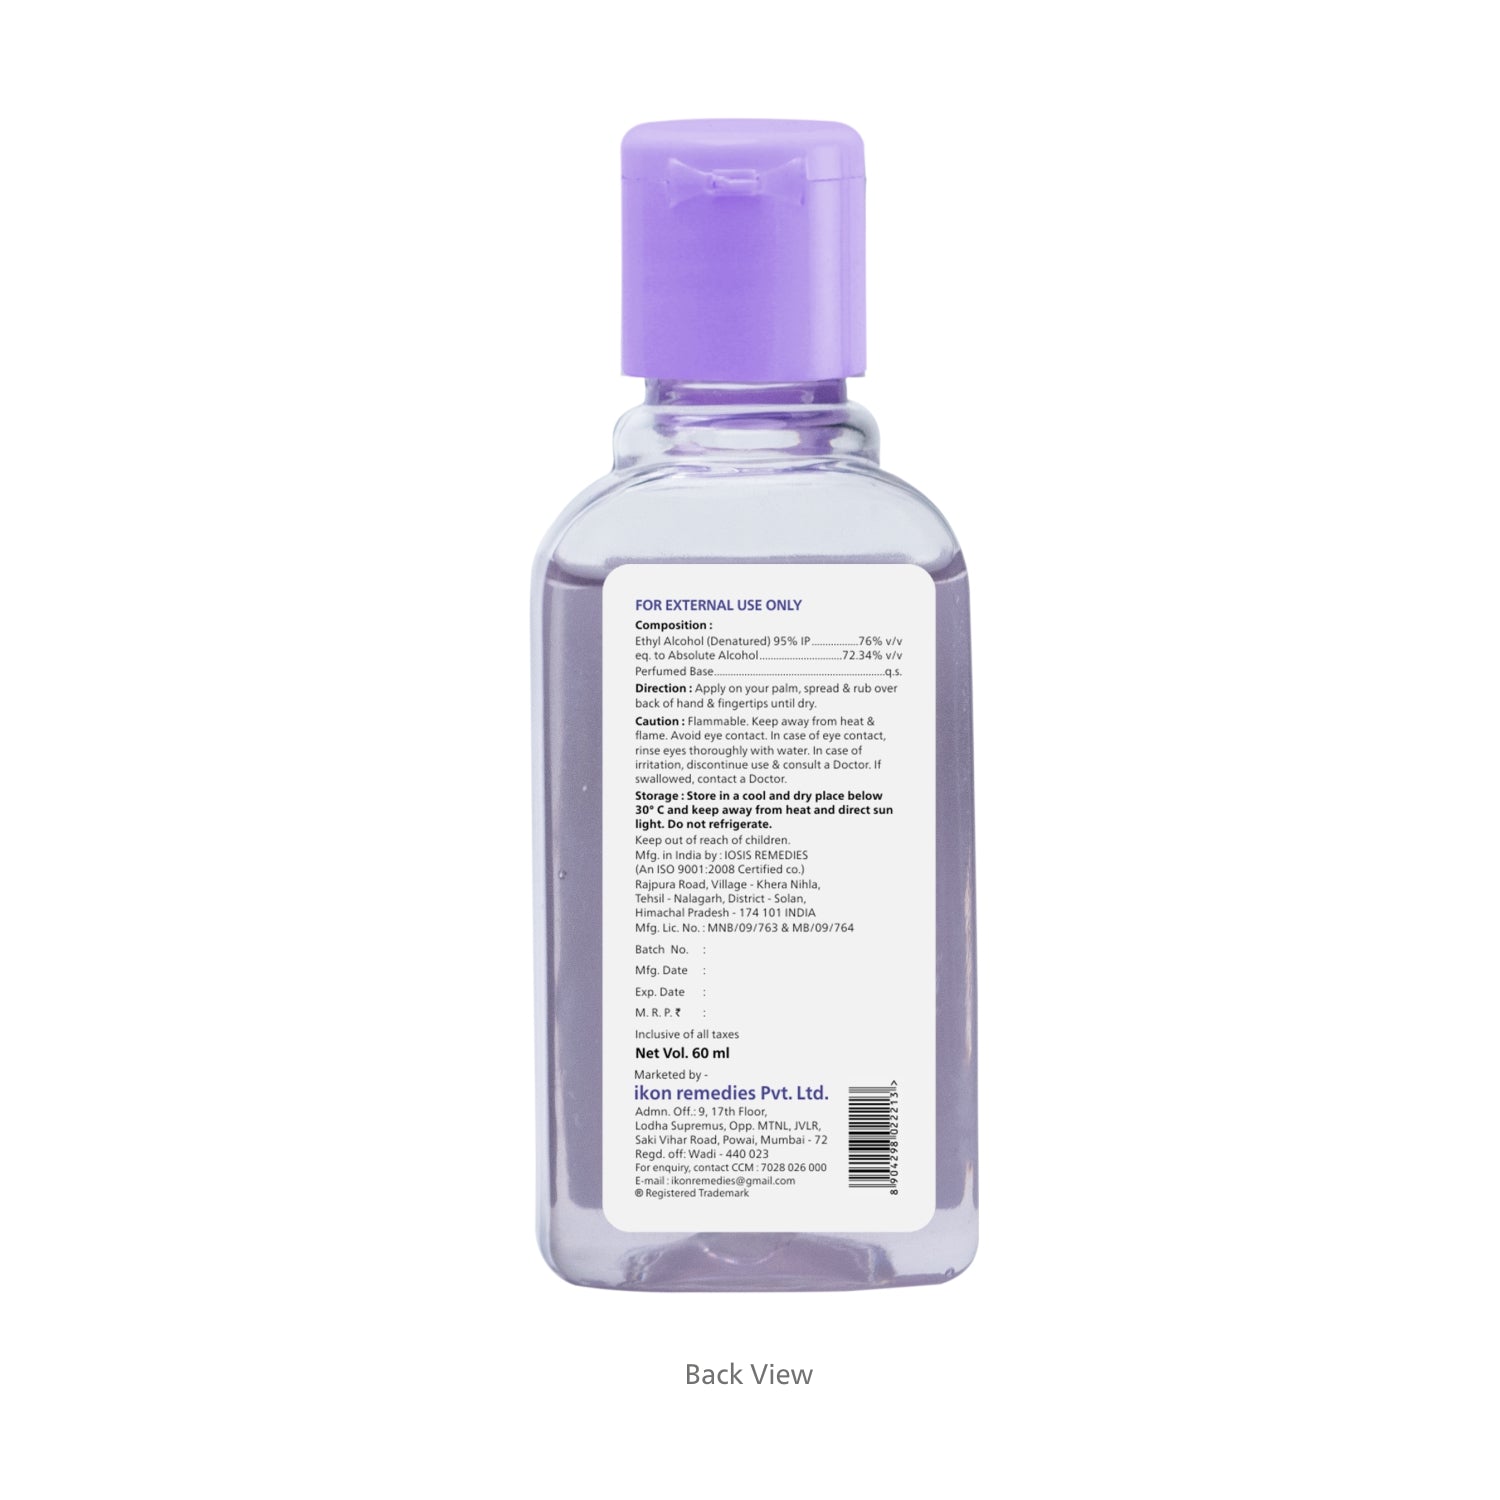 Pearldew Hand Sanitizer Gel (Blueberry) 60 ml